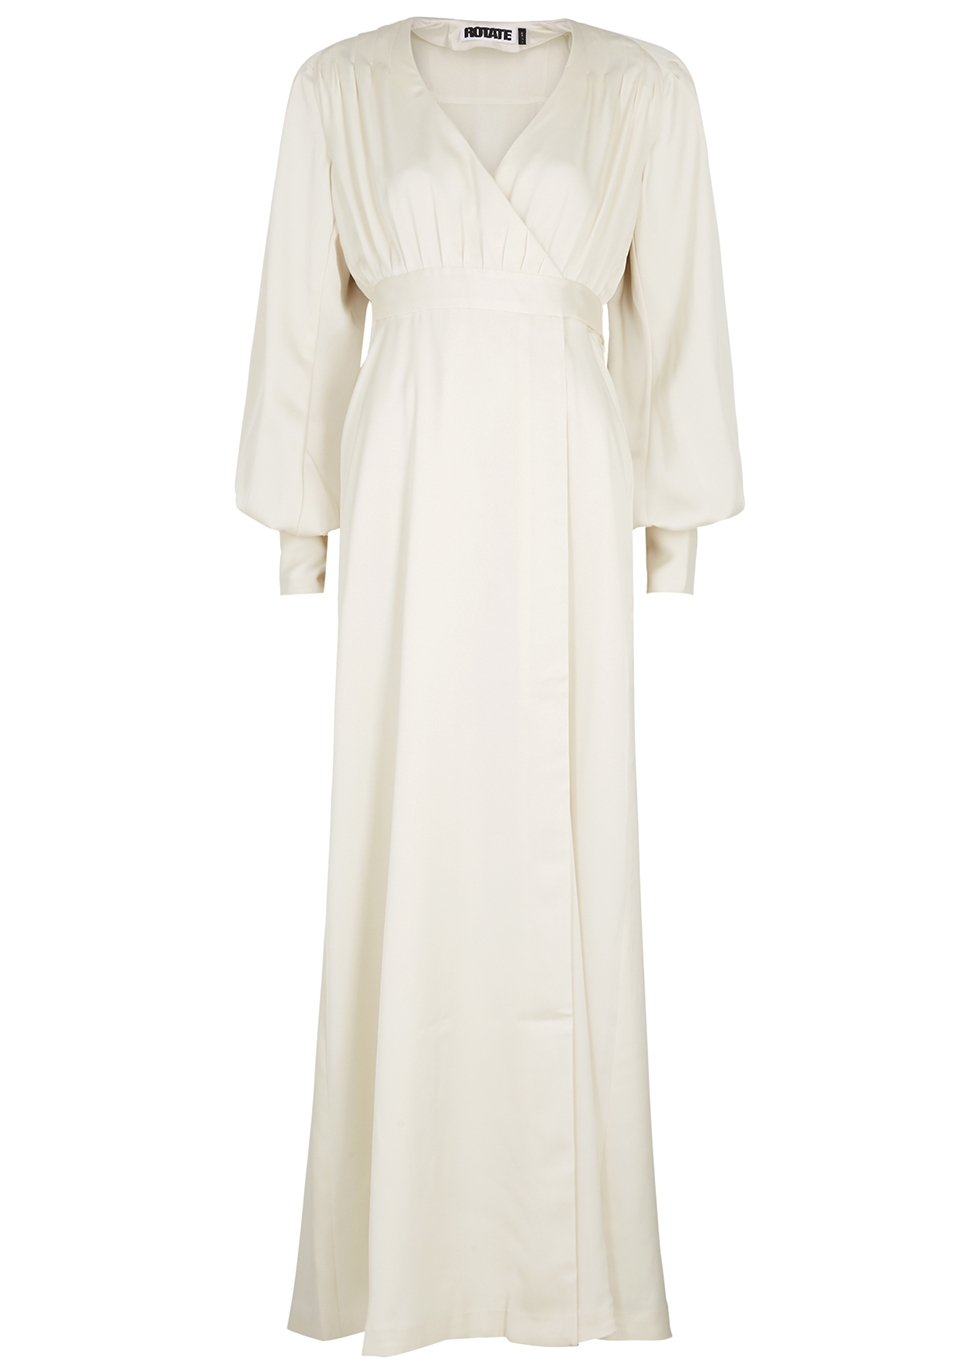 ROTATE Birger Christensen Ria off-white satin wrap dress - Harvey Nichols